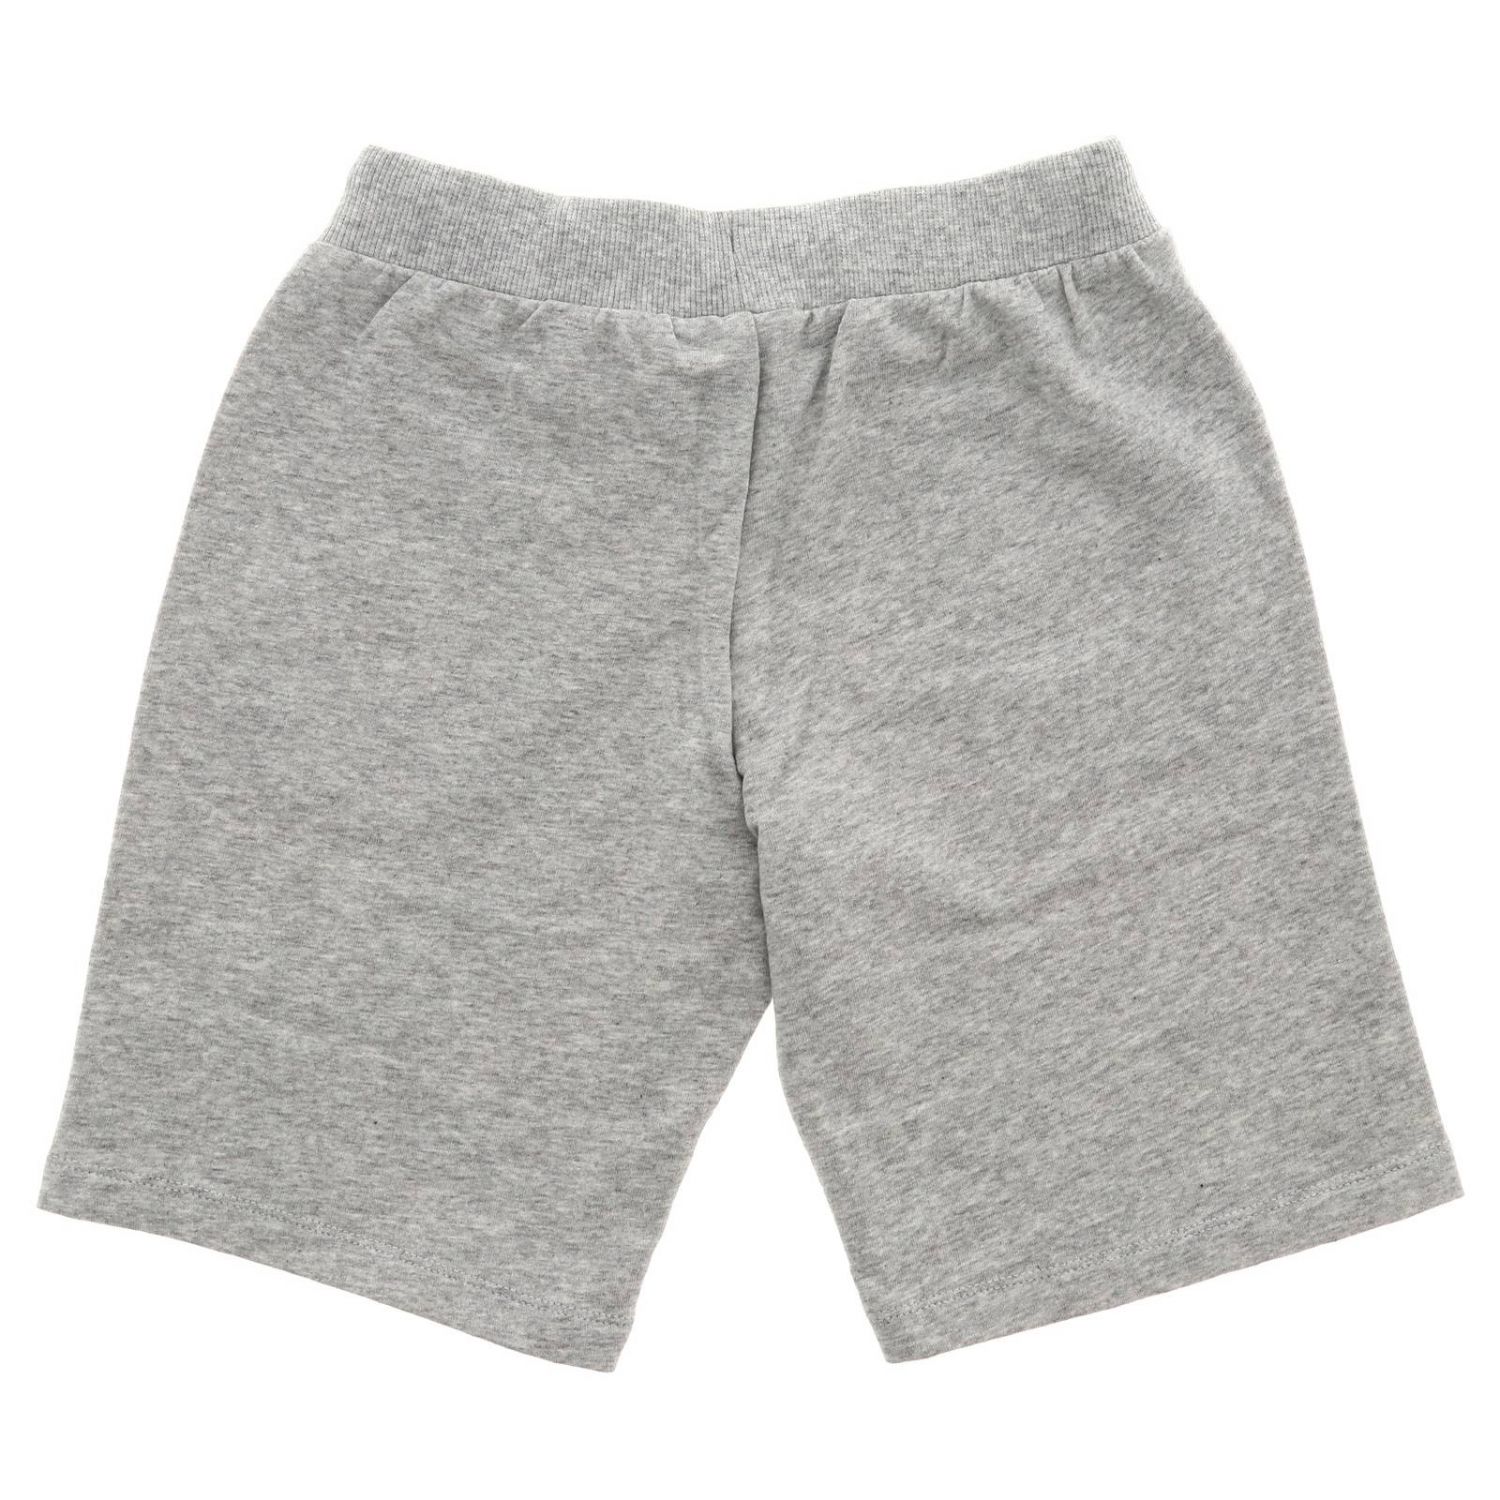 Moschino Kid Outlet: Pants kids | Pants Moschino Kid Kids Grey | Pants ...